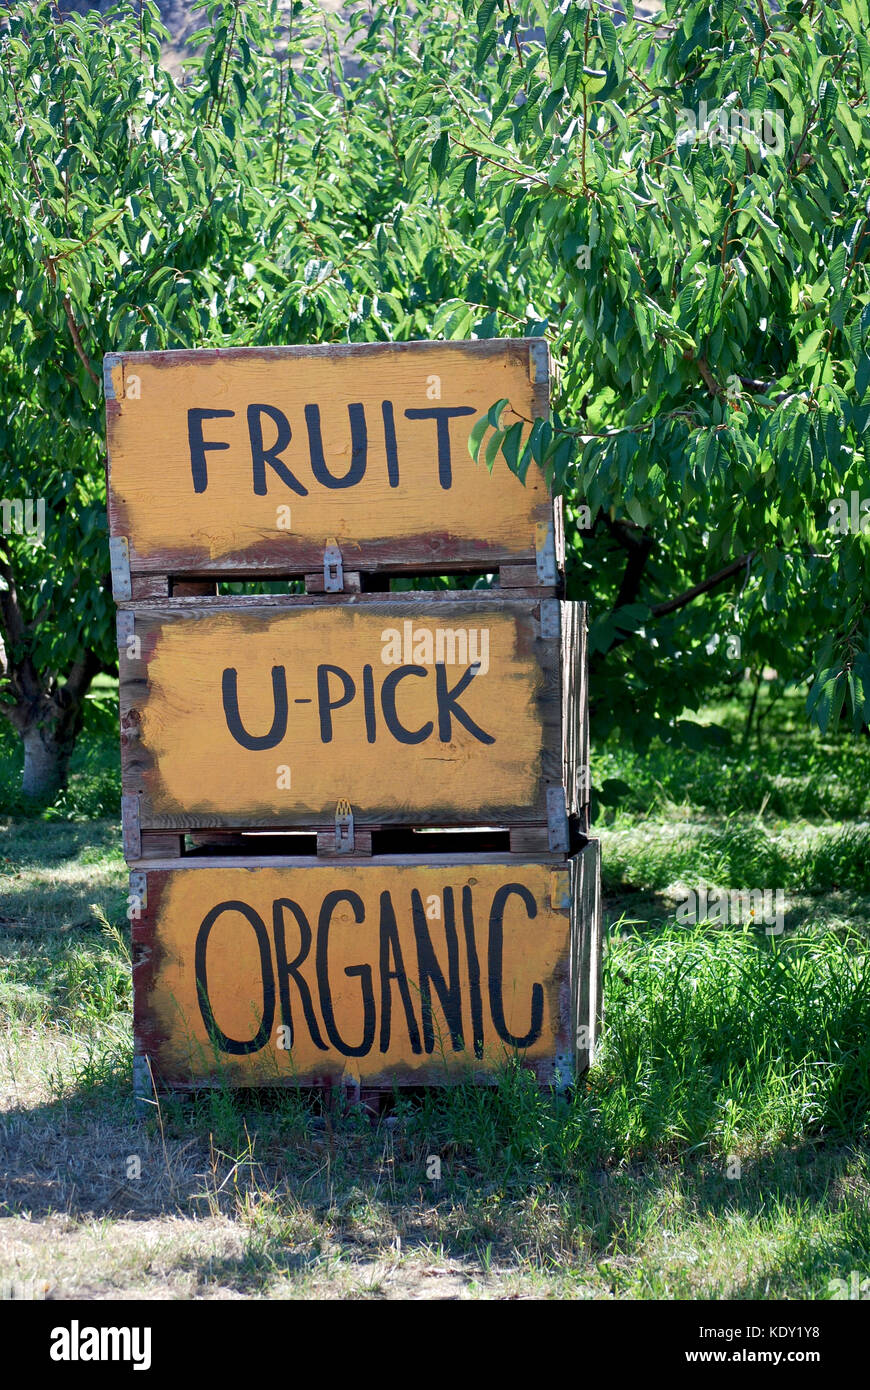 U Pick fruit Orchards signs - Eastern Washington State, USA Stock Photo